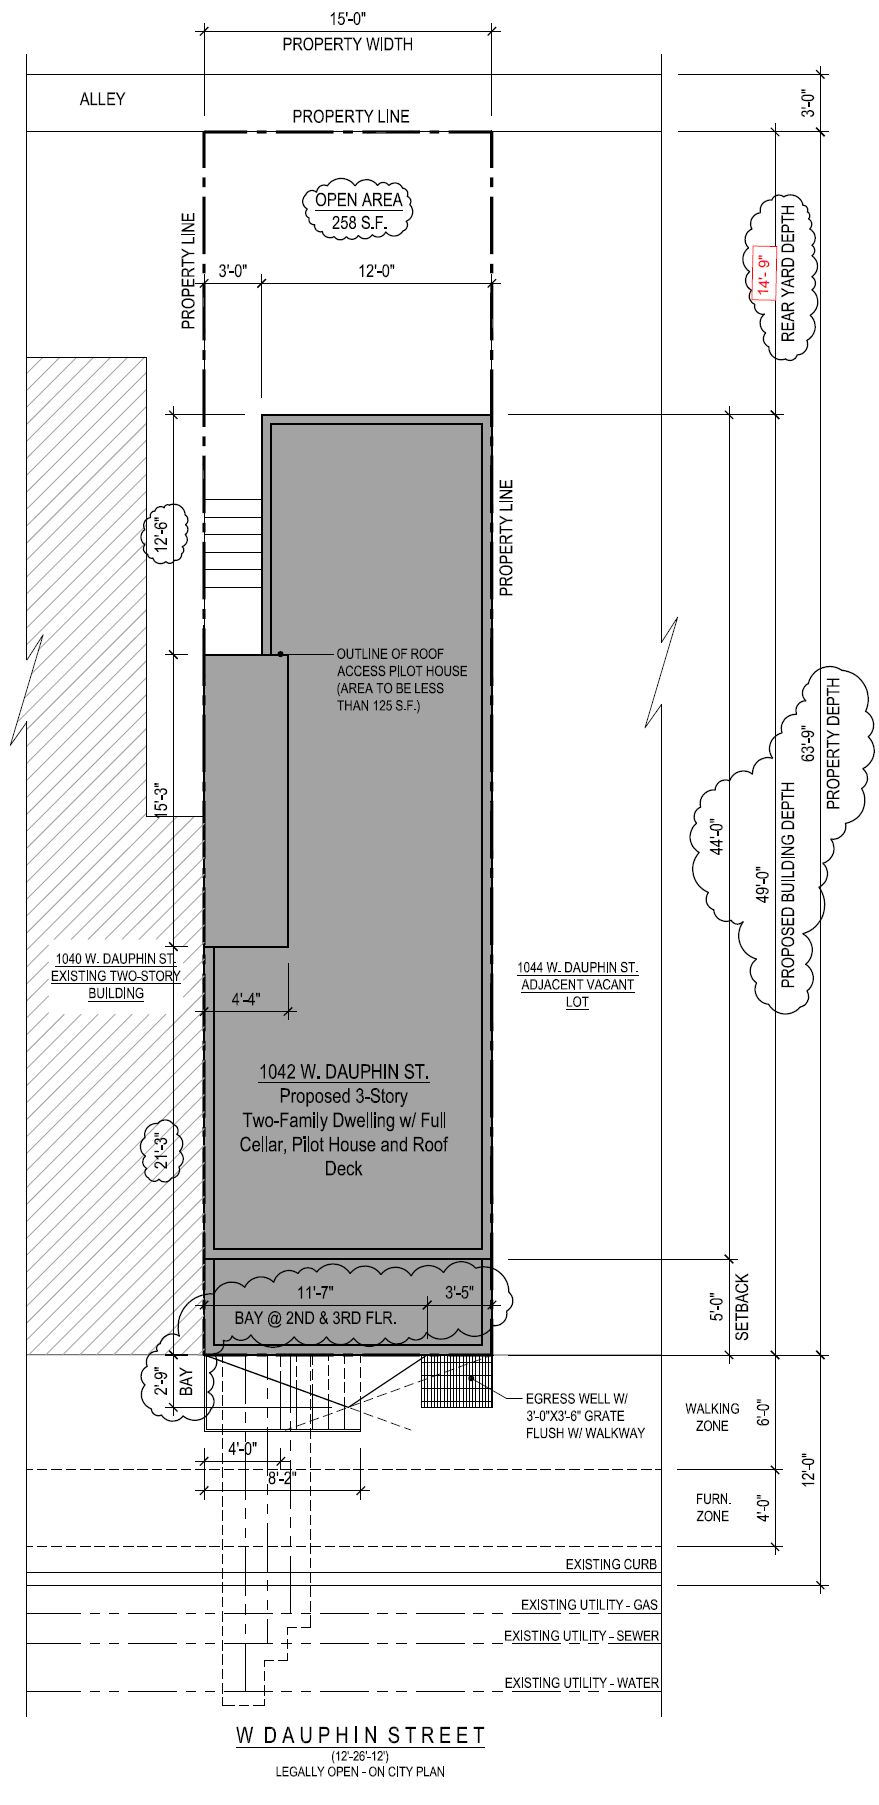 1042 West Dauphin Street. Site plan. Credit: 24 Seven Design Group via the City of Philadelphia